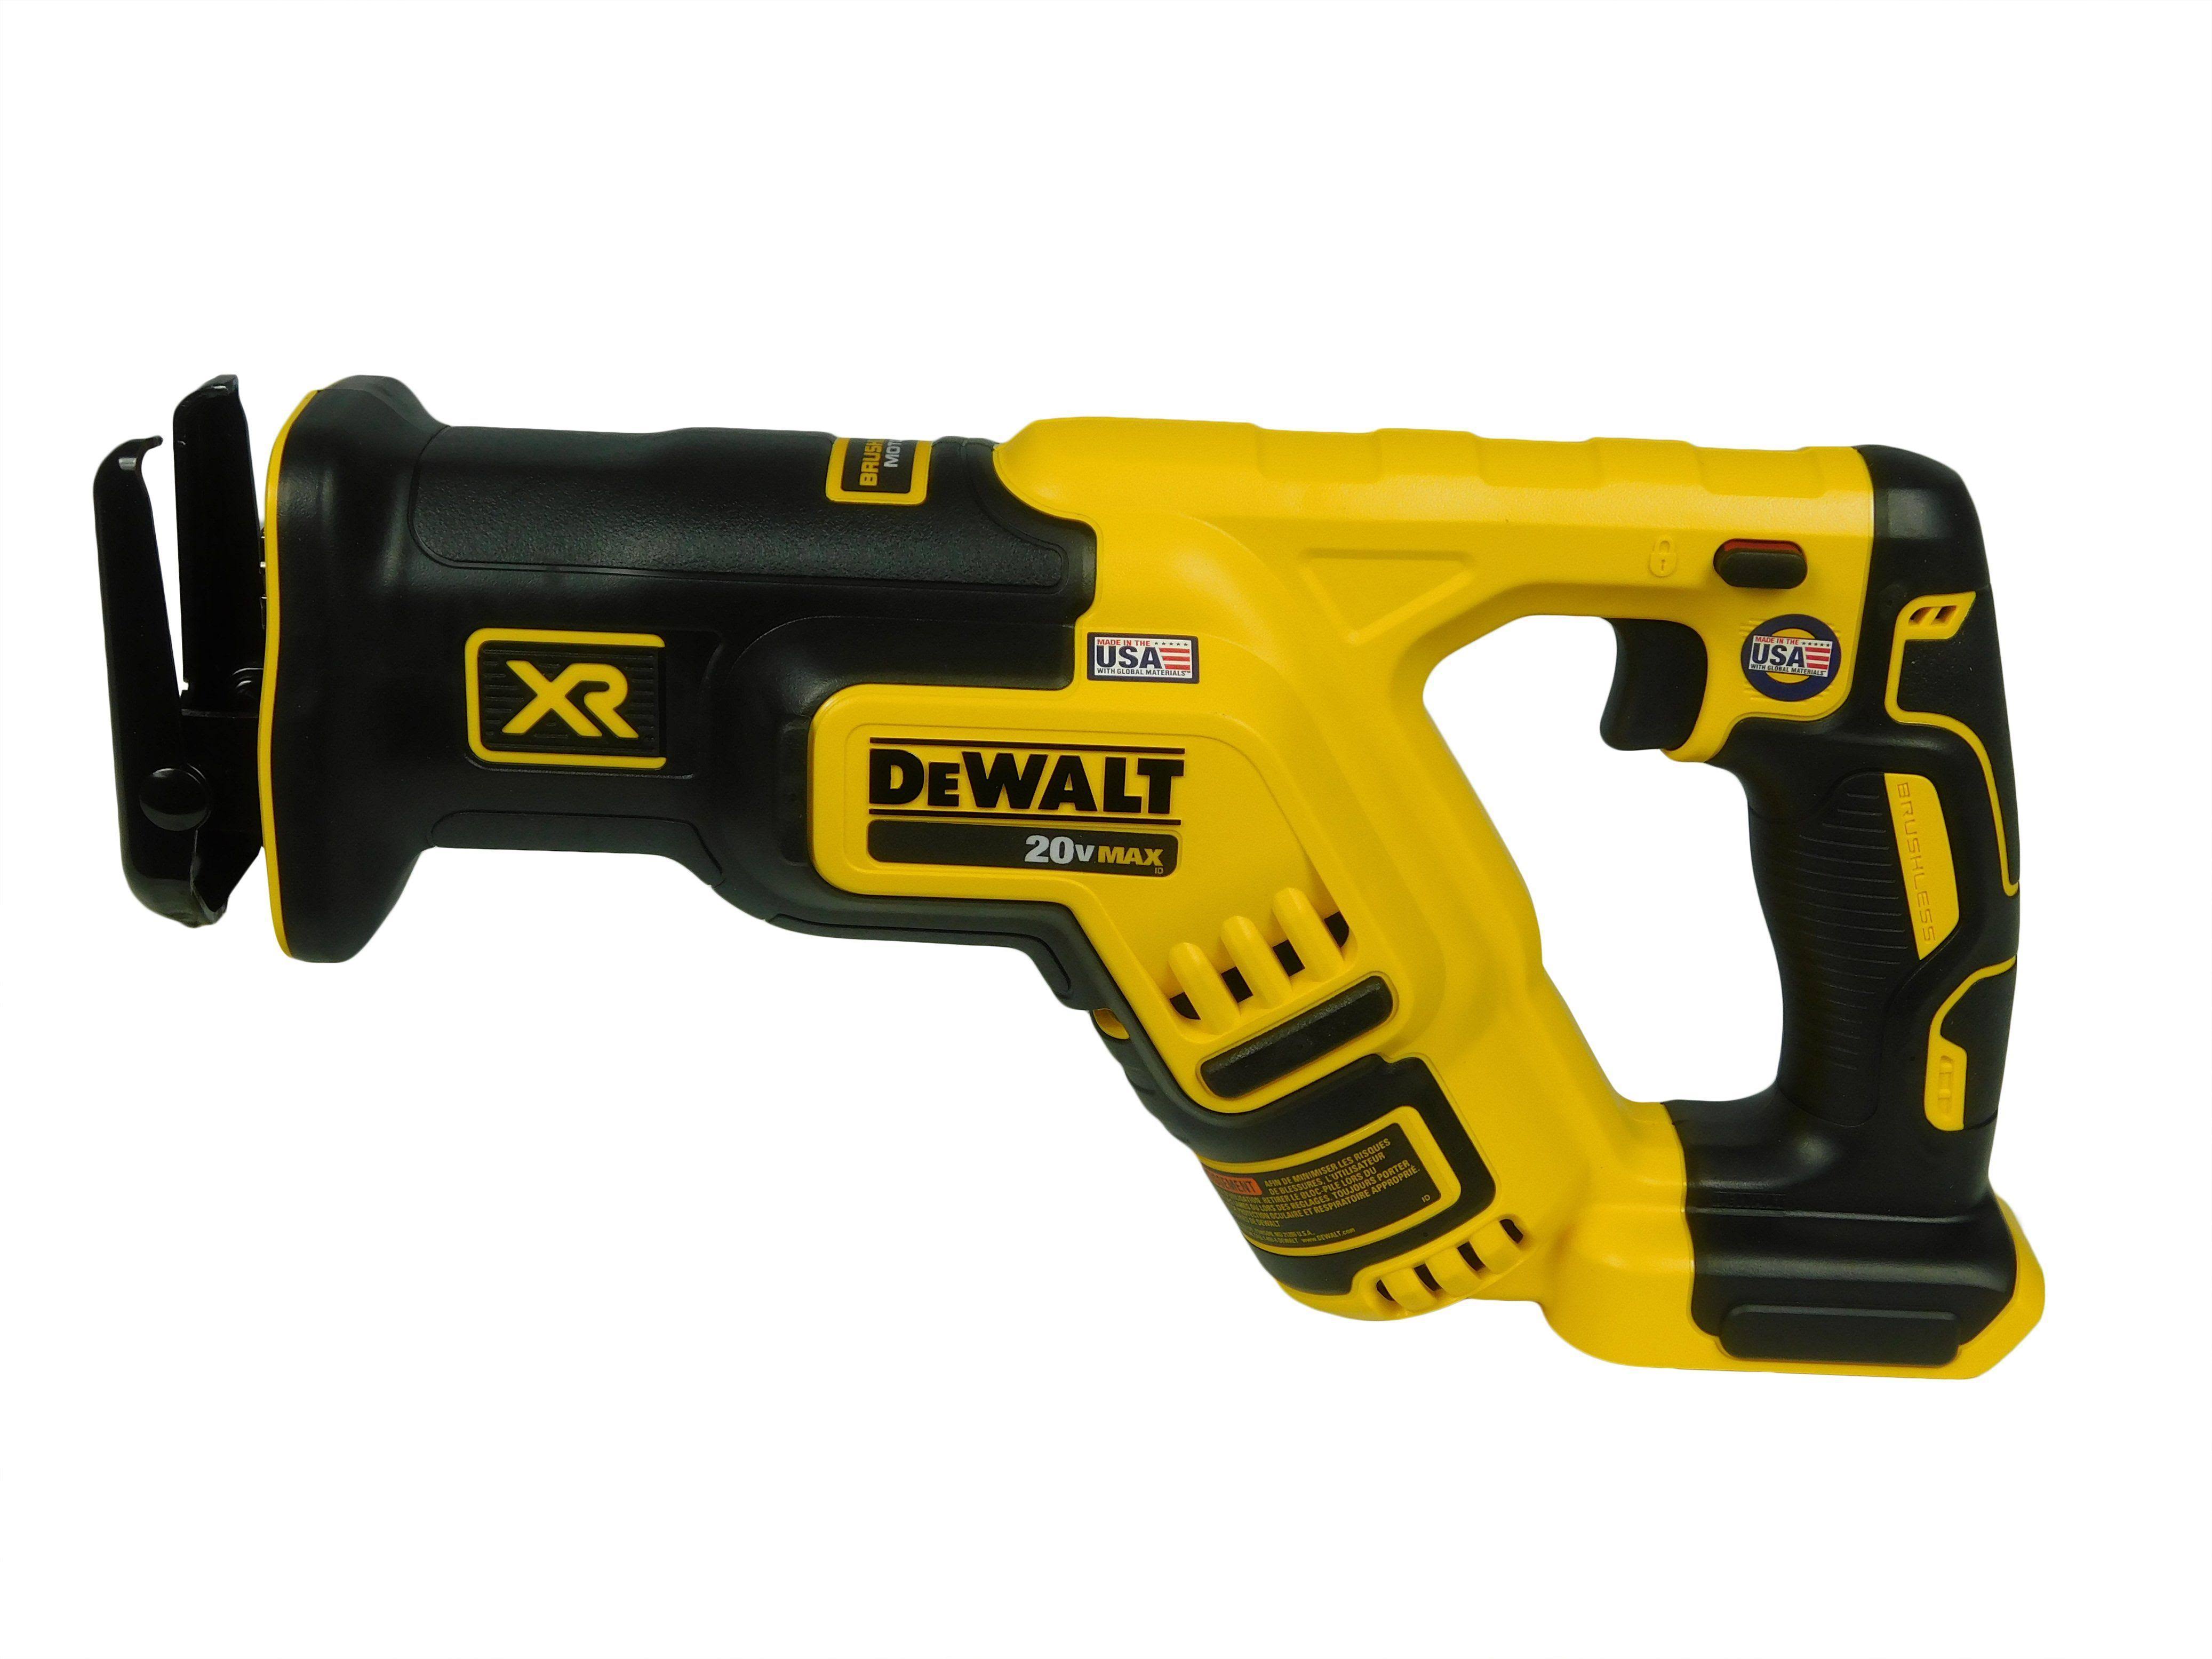 DEWALT DCS367B Max XR Brushless Compact Reciprocating Saw - 20v